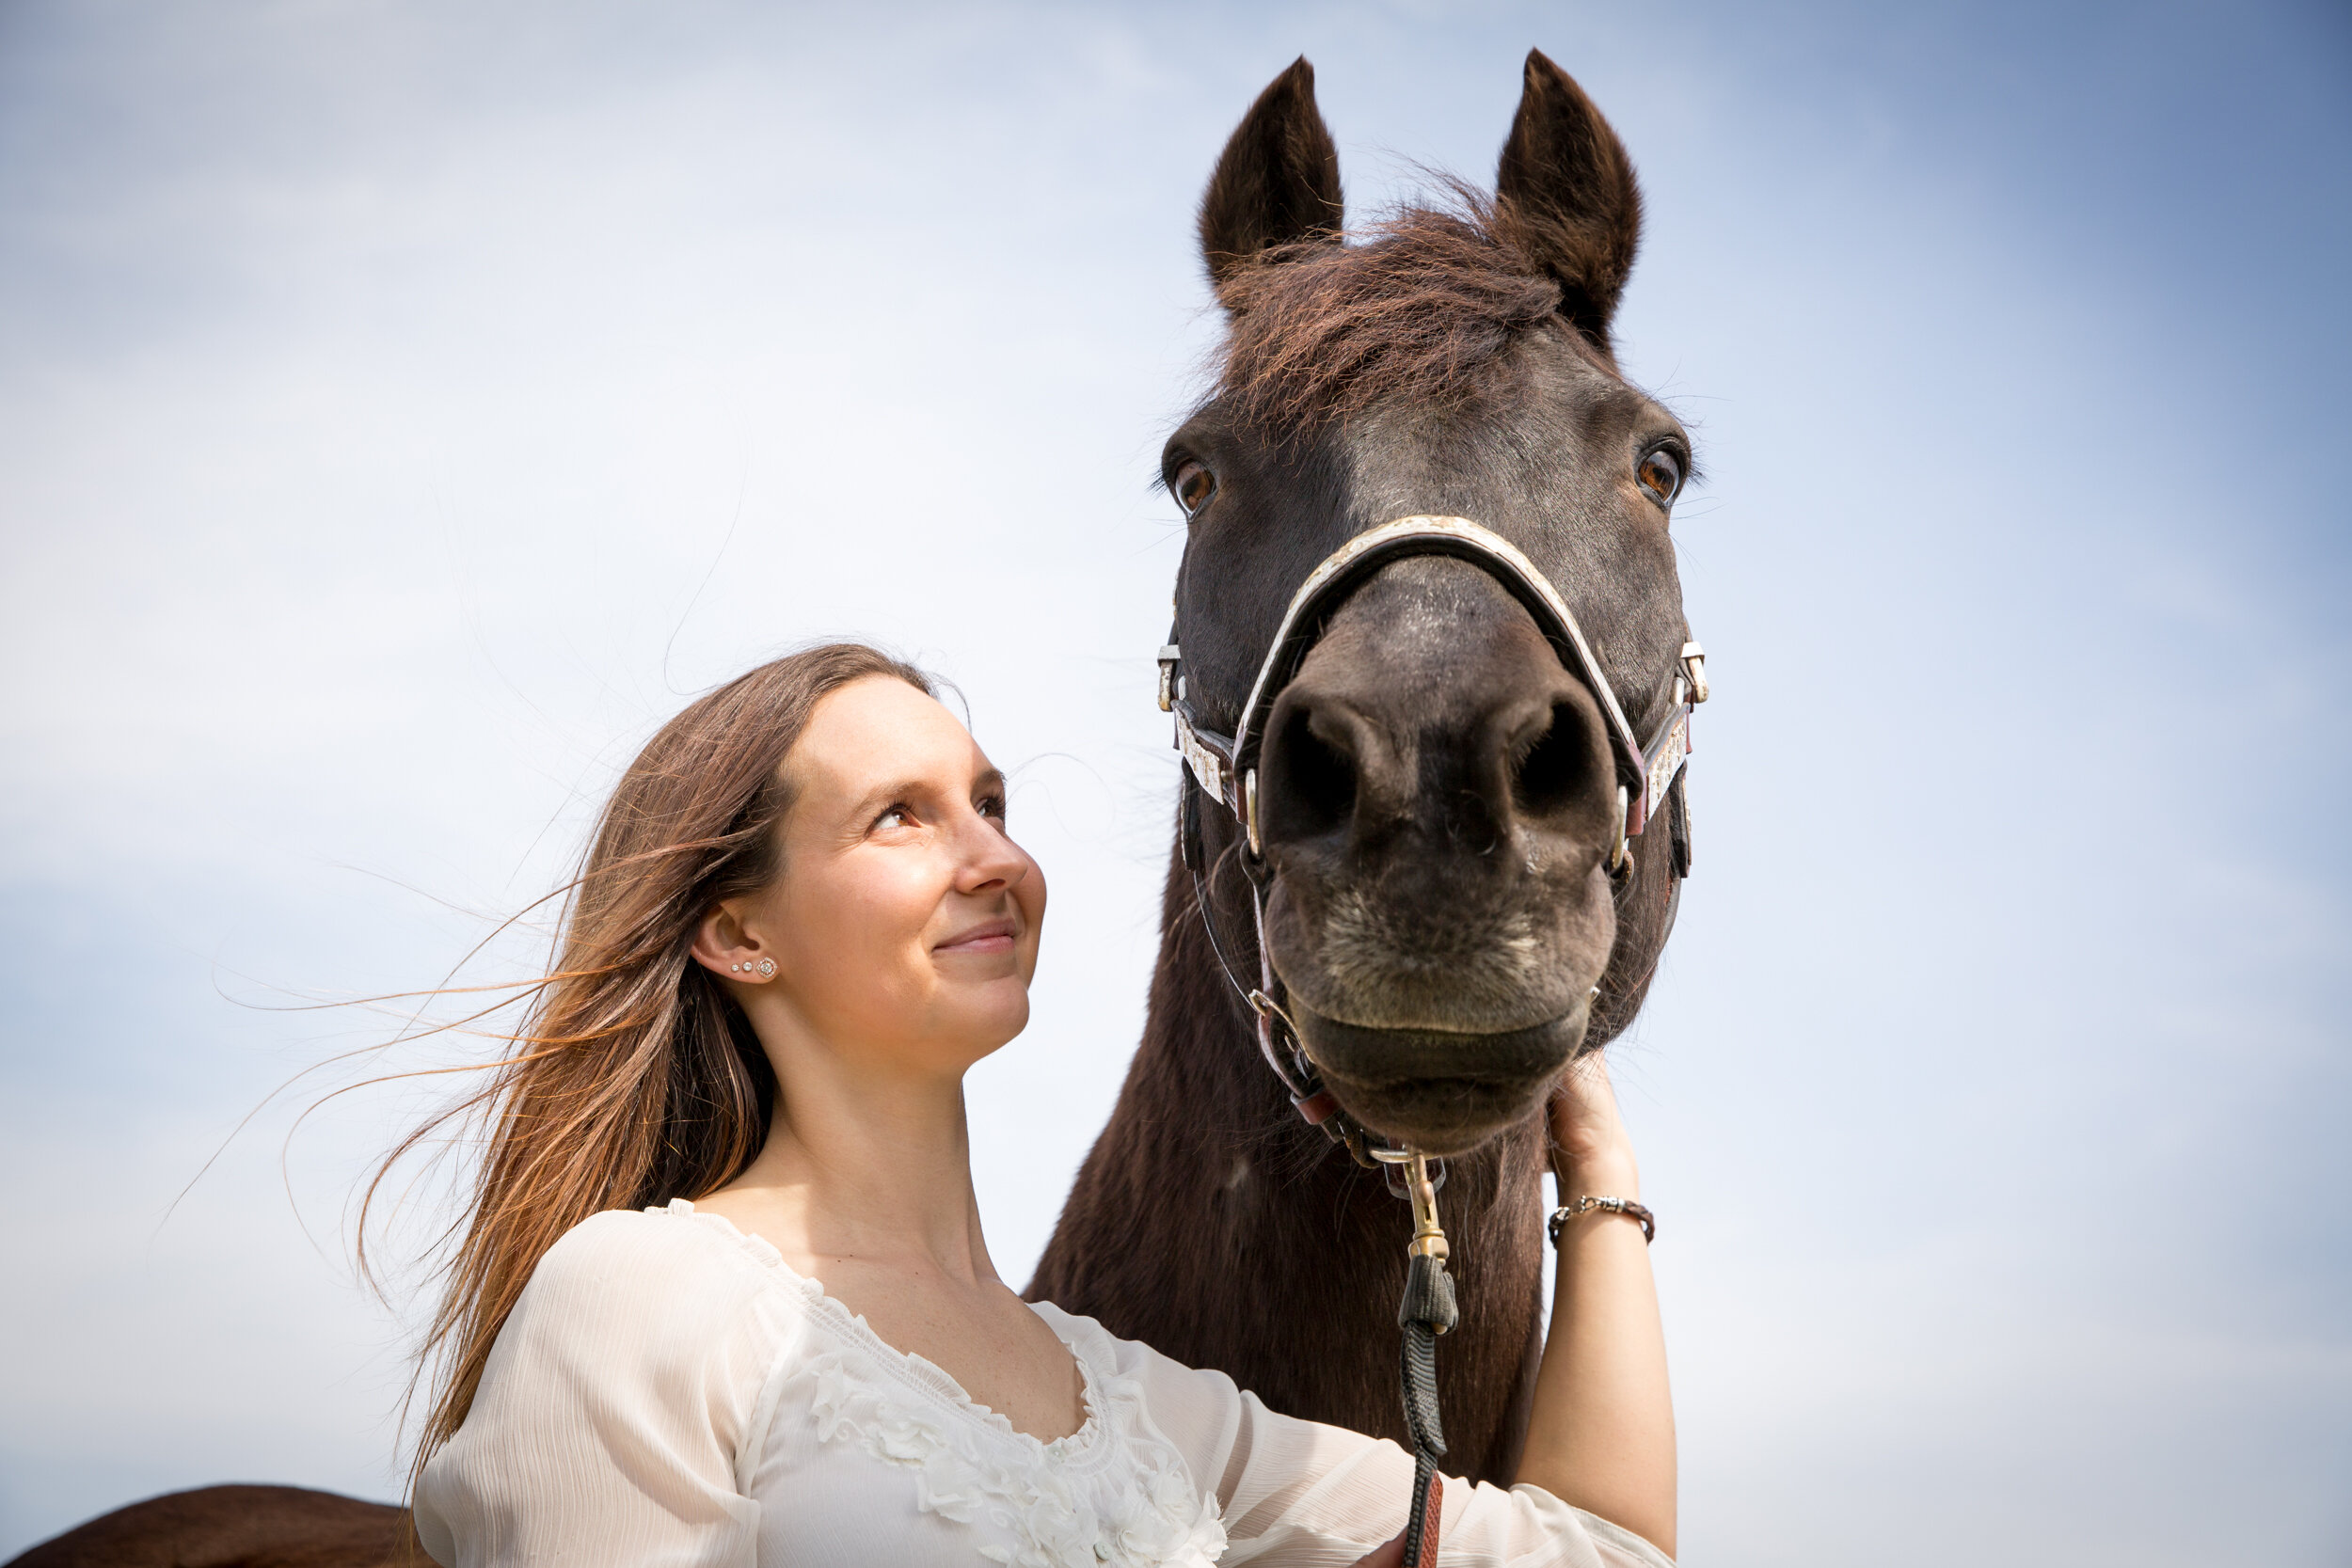 Jane-Sikorski-horse-photographer-4671.jpg